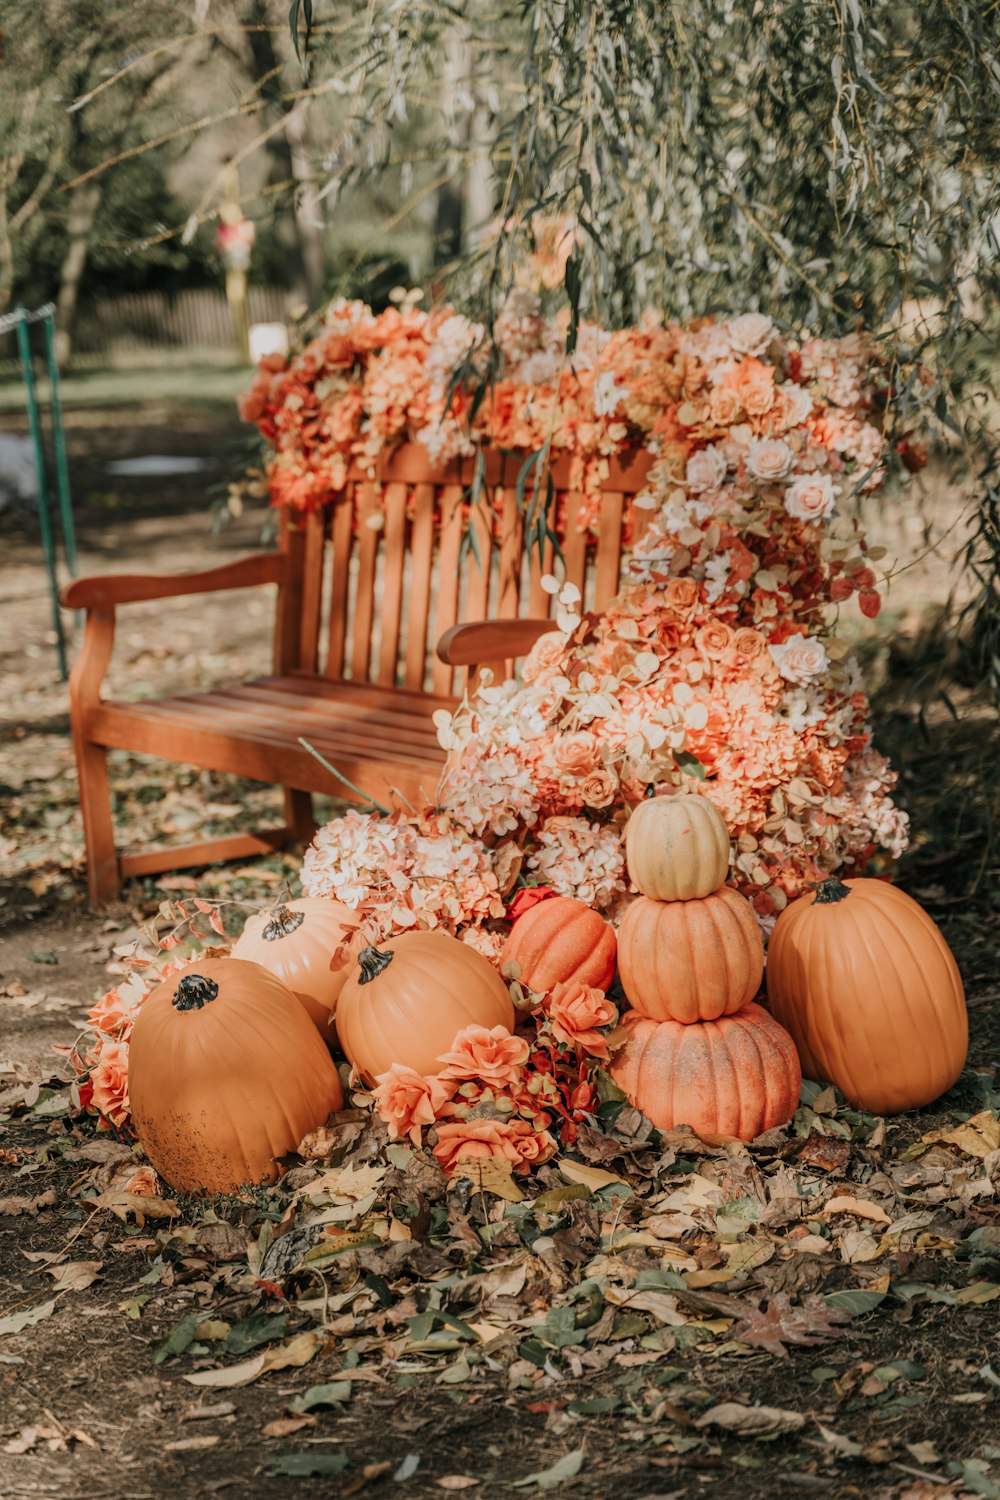 pumpkins on ground near wooden chair